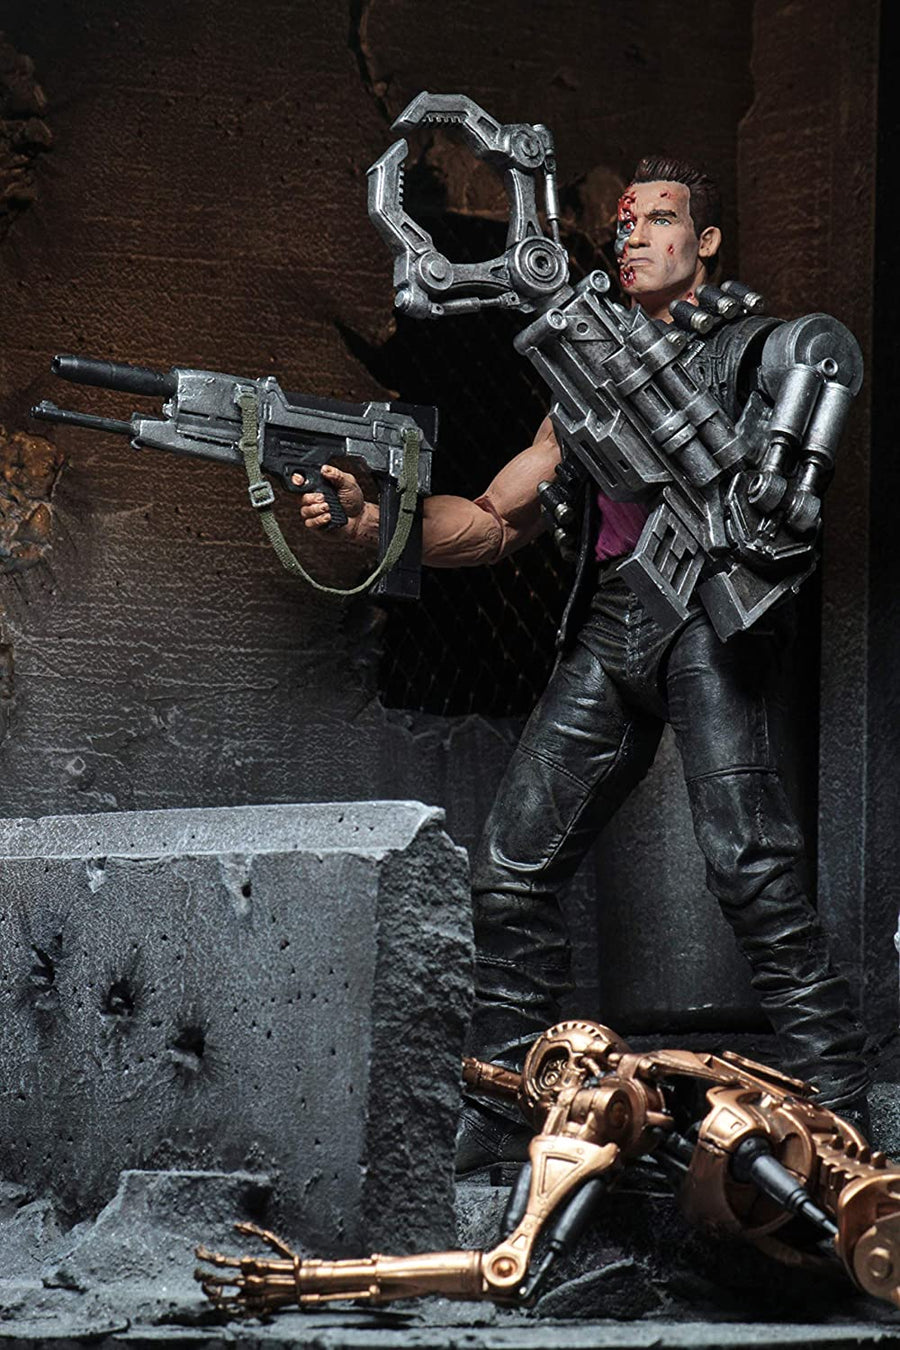 Terminator 2 - Power Arm Terminator Kenner Tribute 7” Action Figure